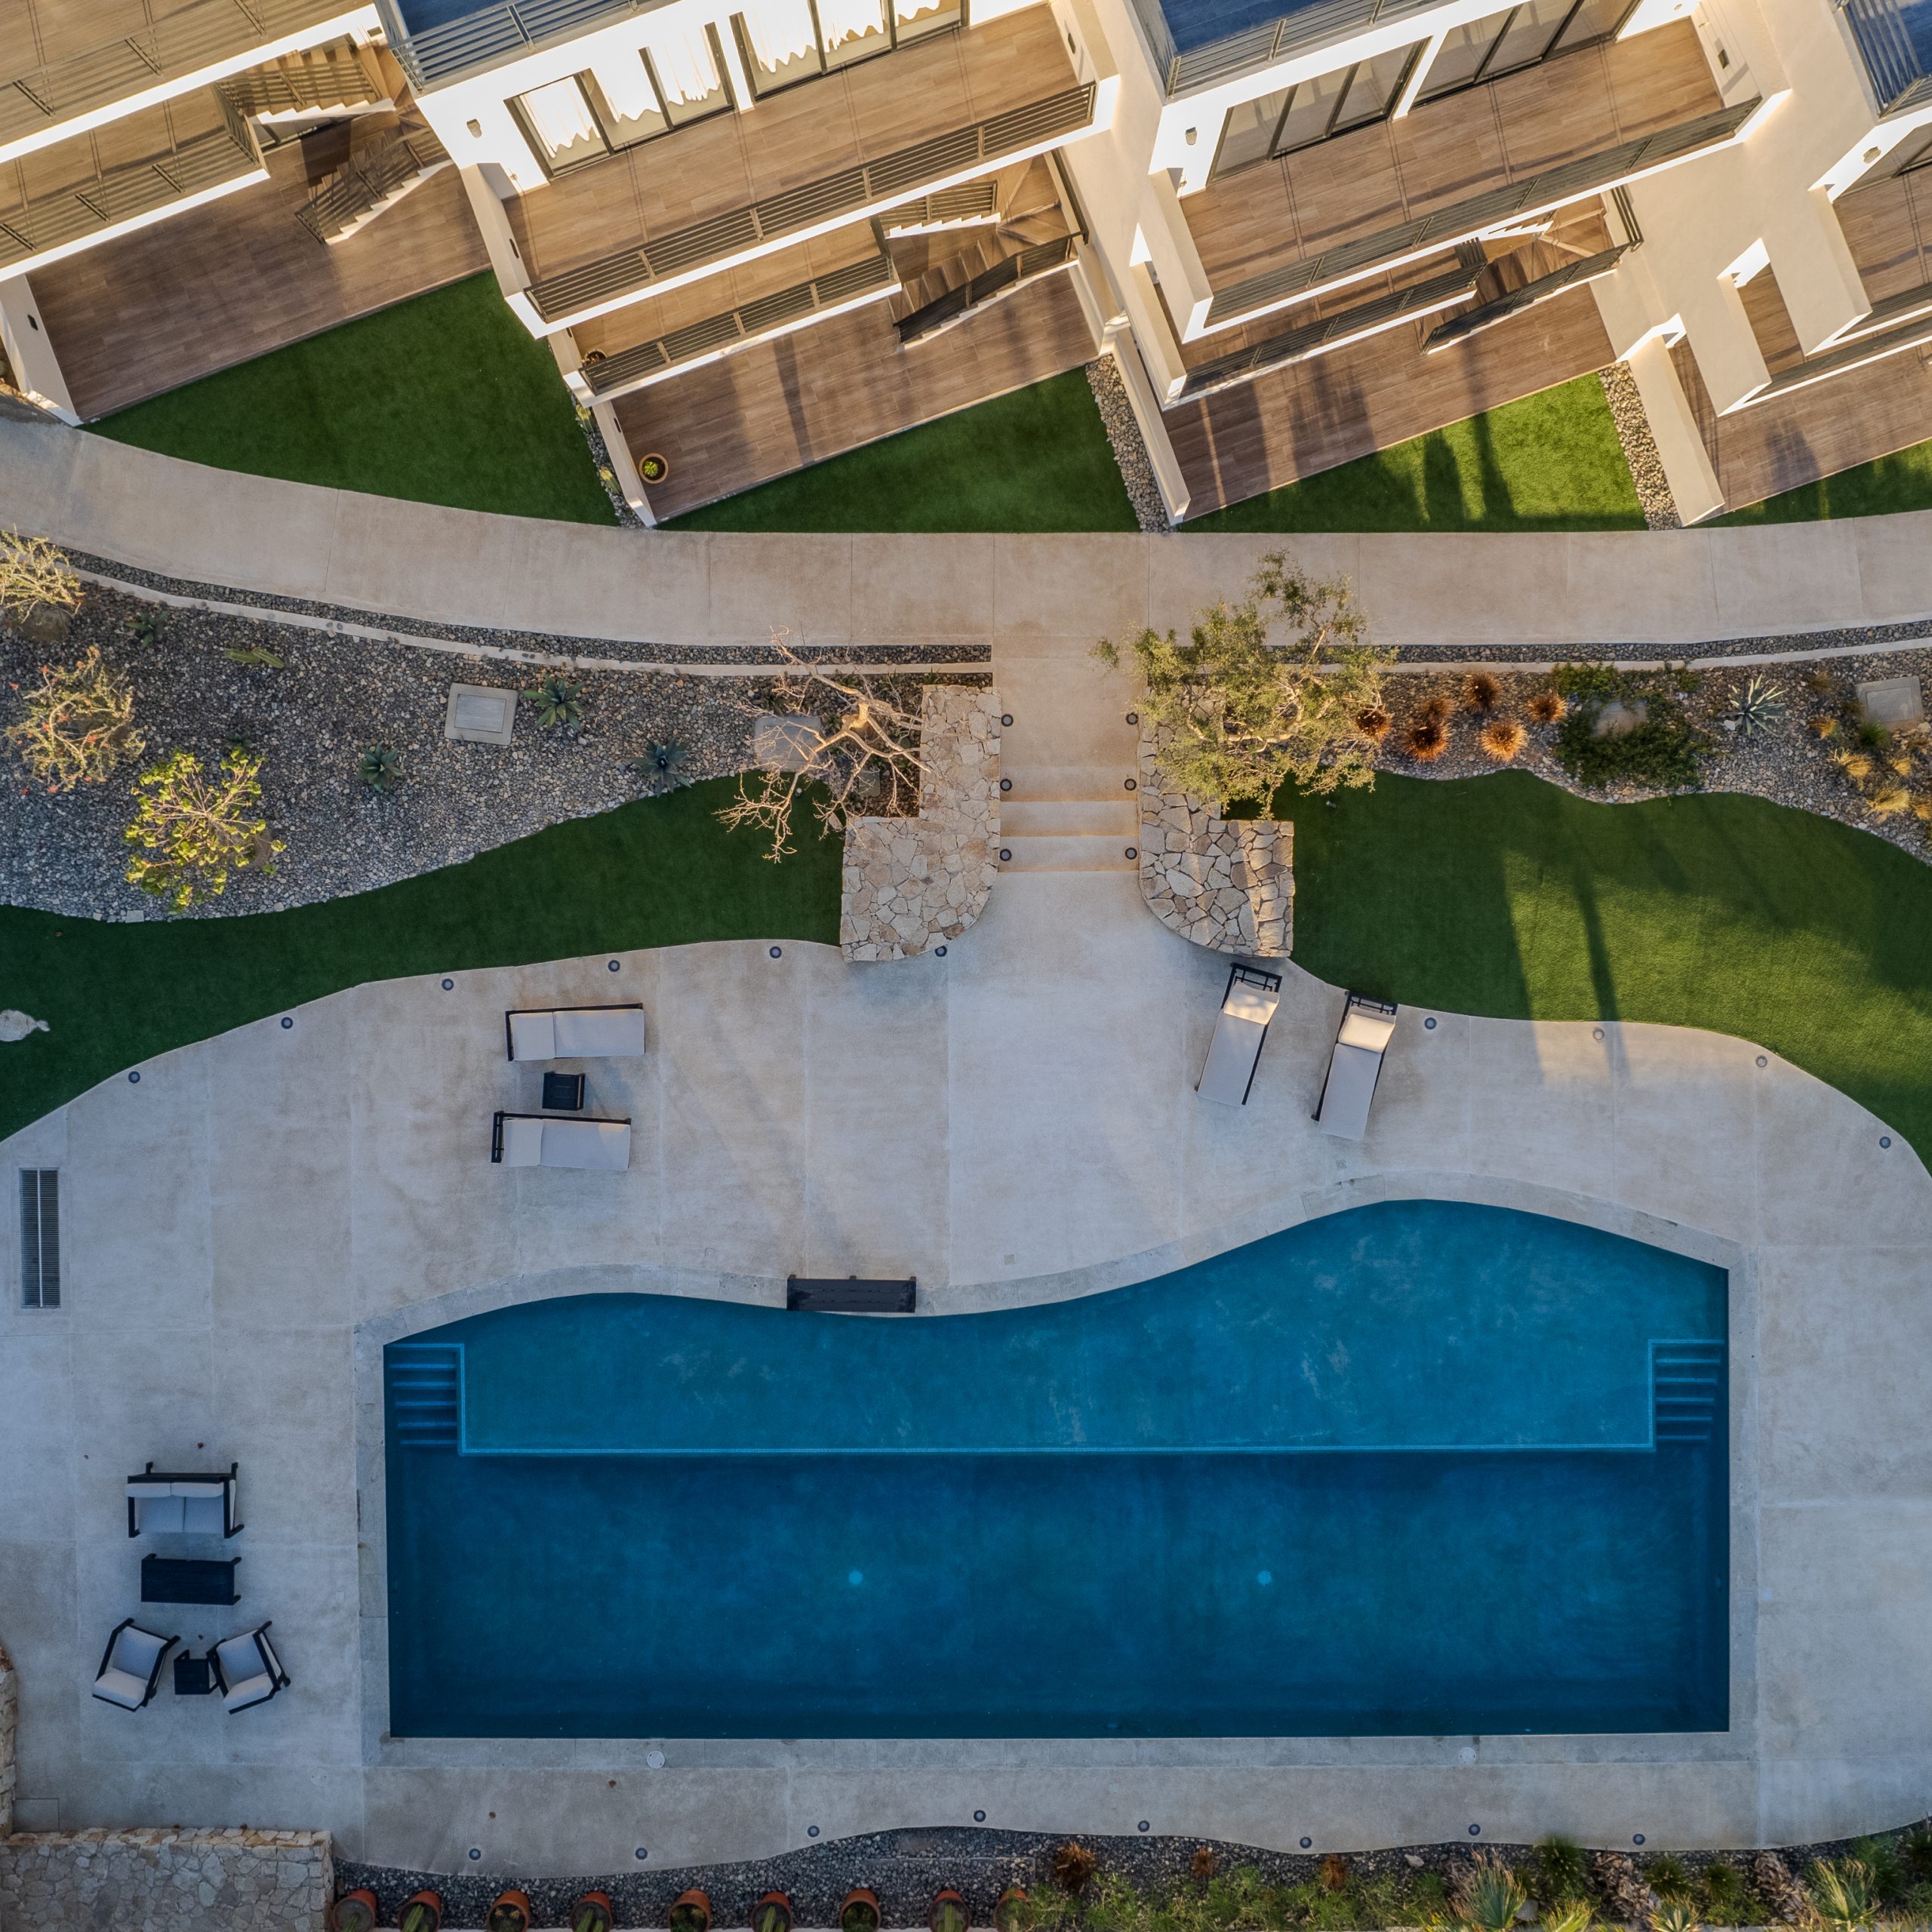 “Vista Romance” Luxury Cabo Condo with Arch Views, VIP Comfort, 2 Pools, Beachfront Bliss.